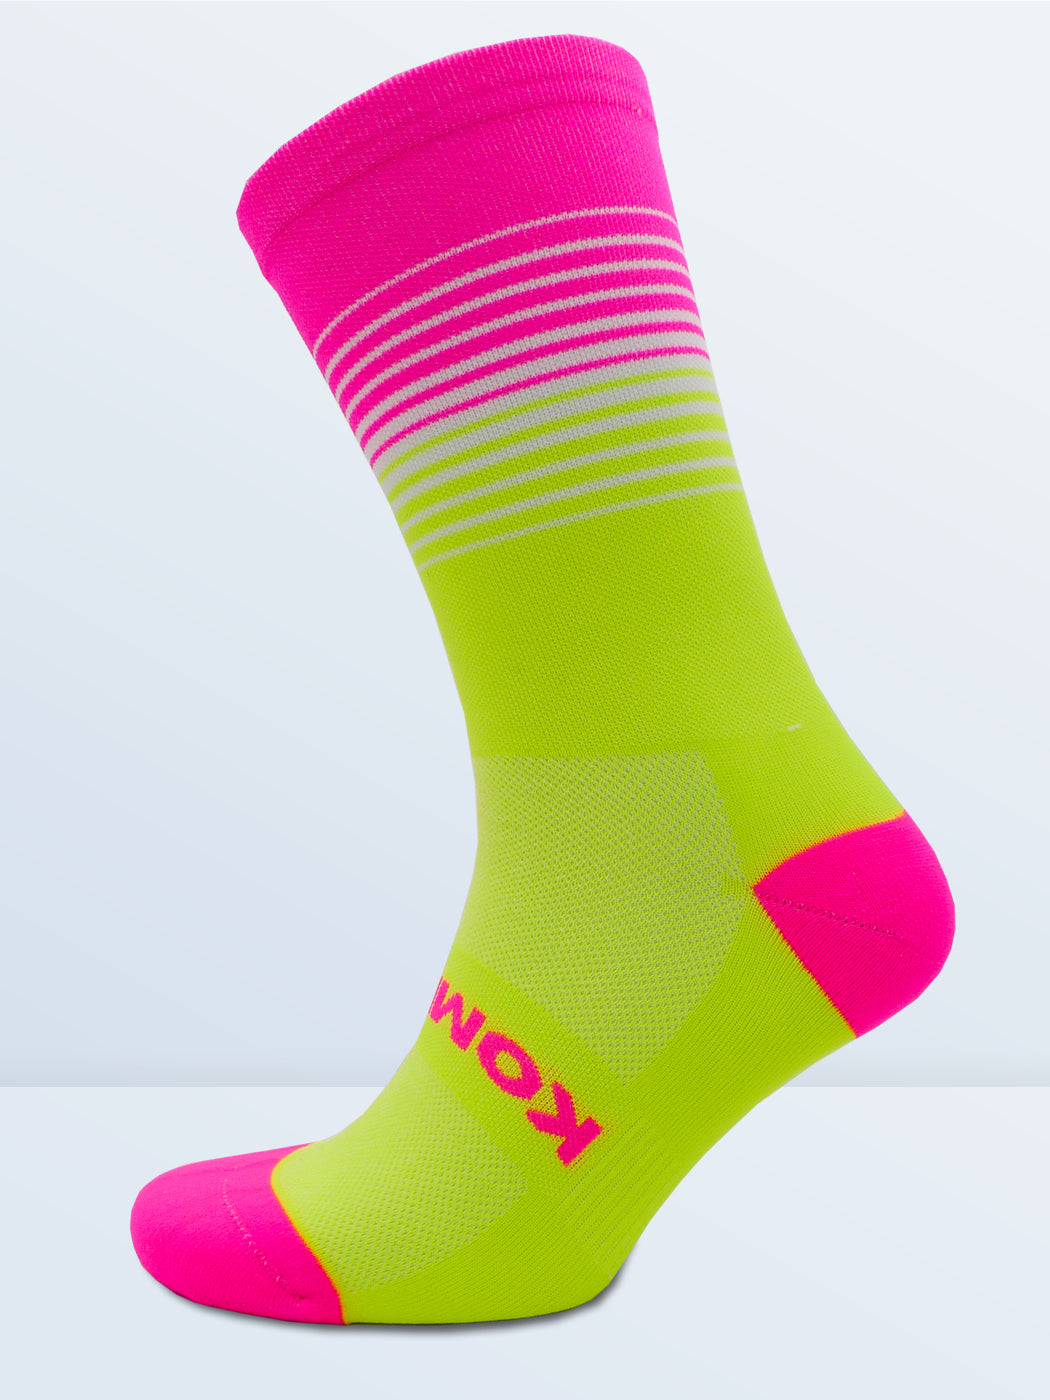 Swagger Socks - Fluro Yellow & Pink